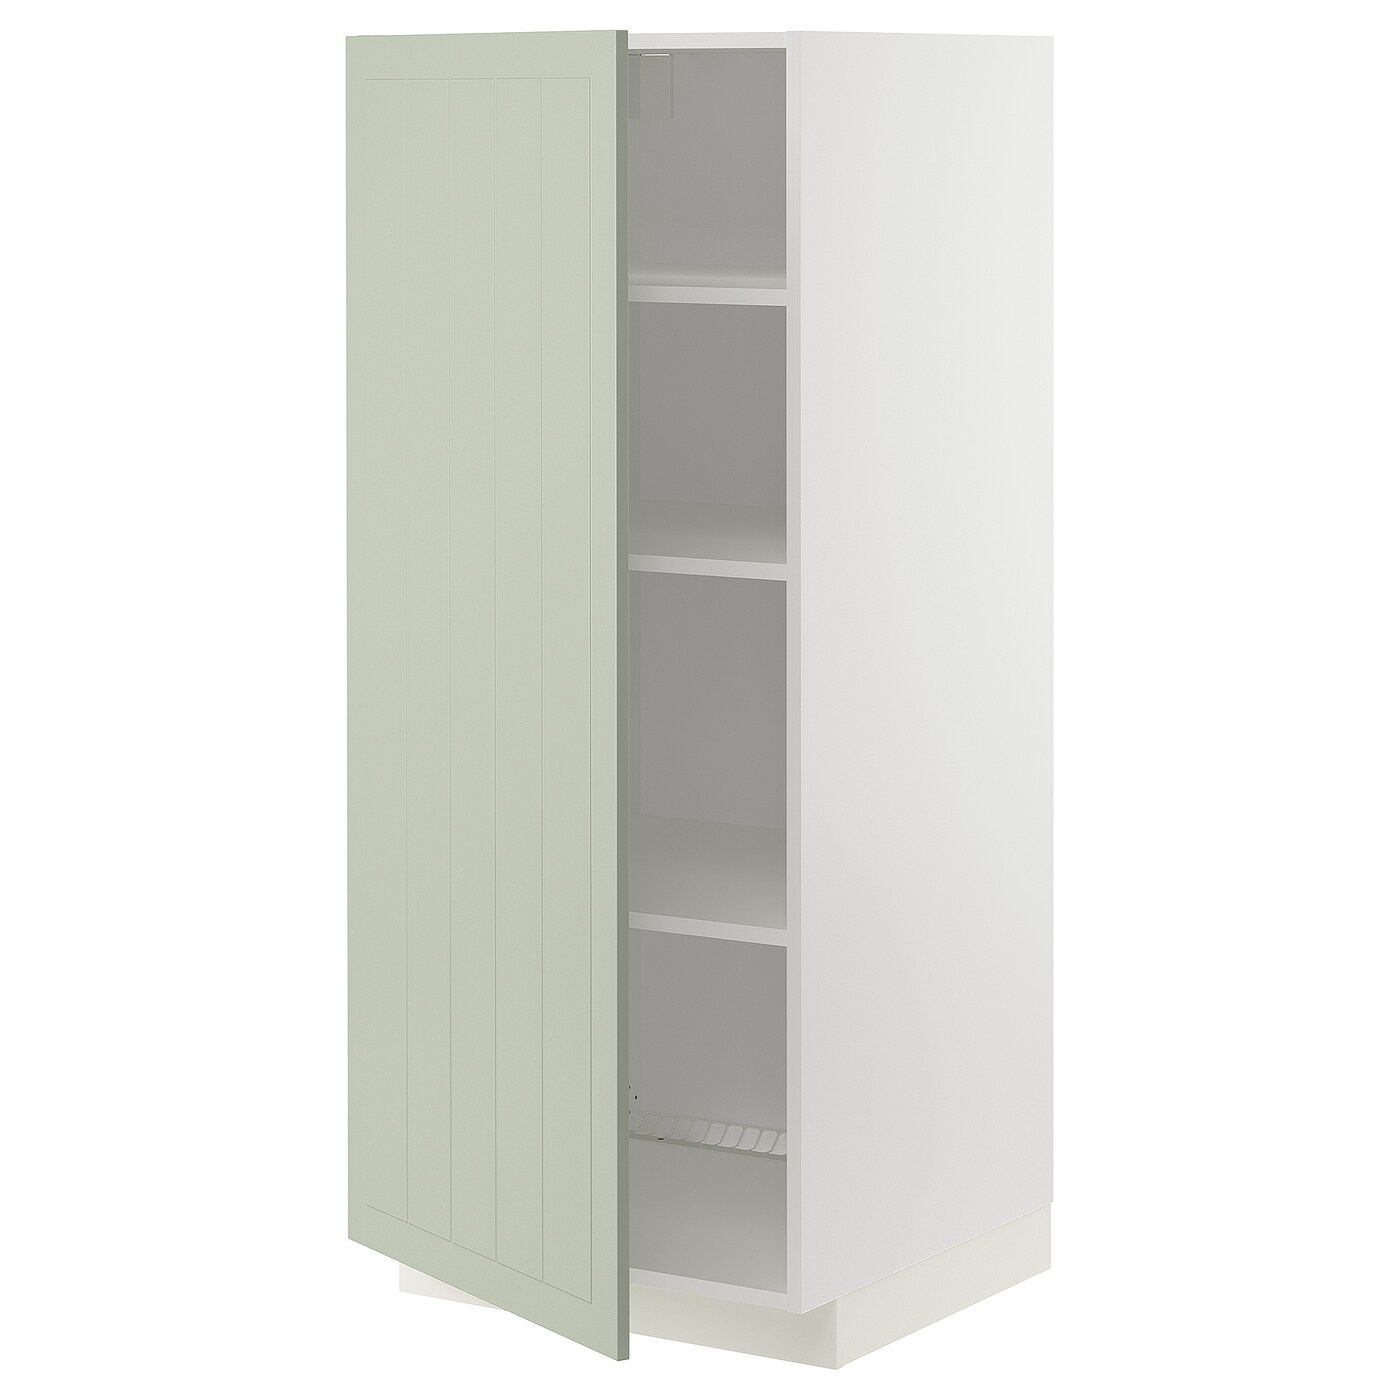 Напольный кухонный шкаф - IKEA METOD/МЕТОД ИКЕА, 140х60х60 см, белый/зеленый